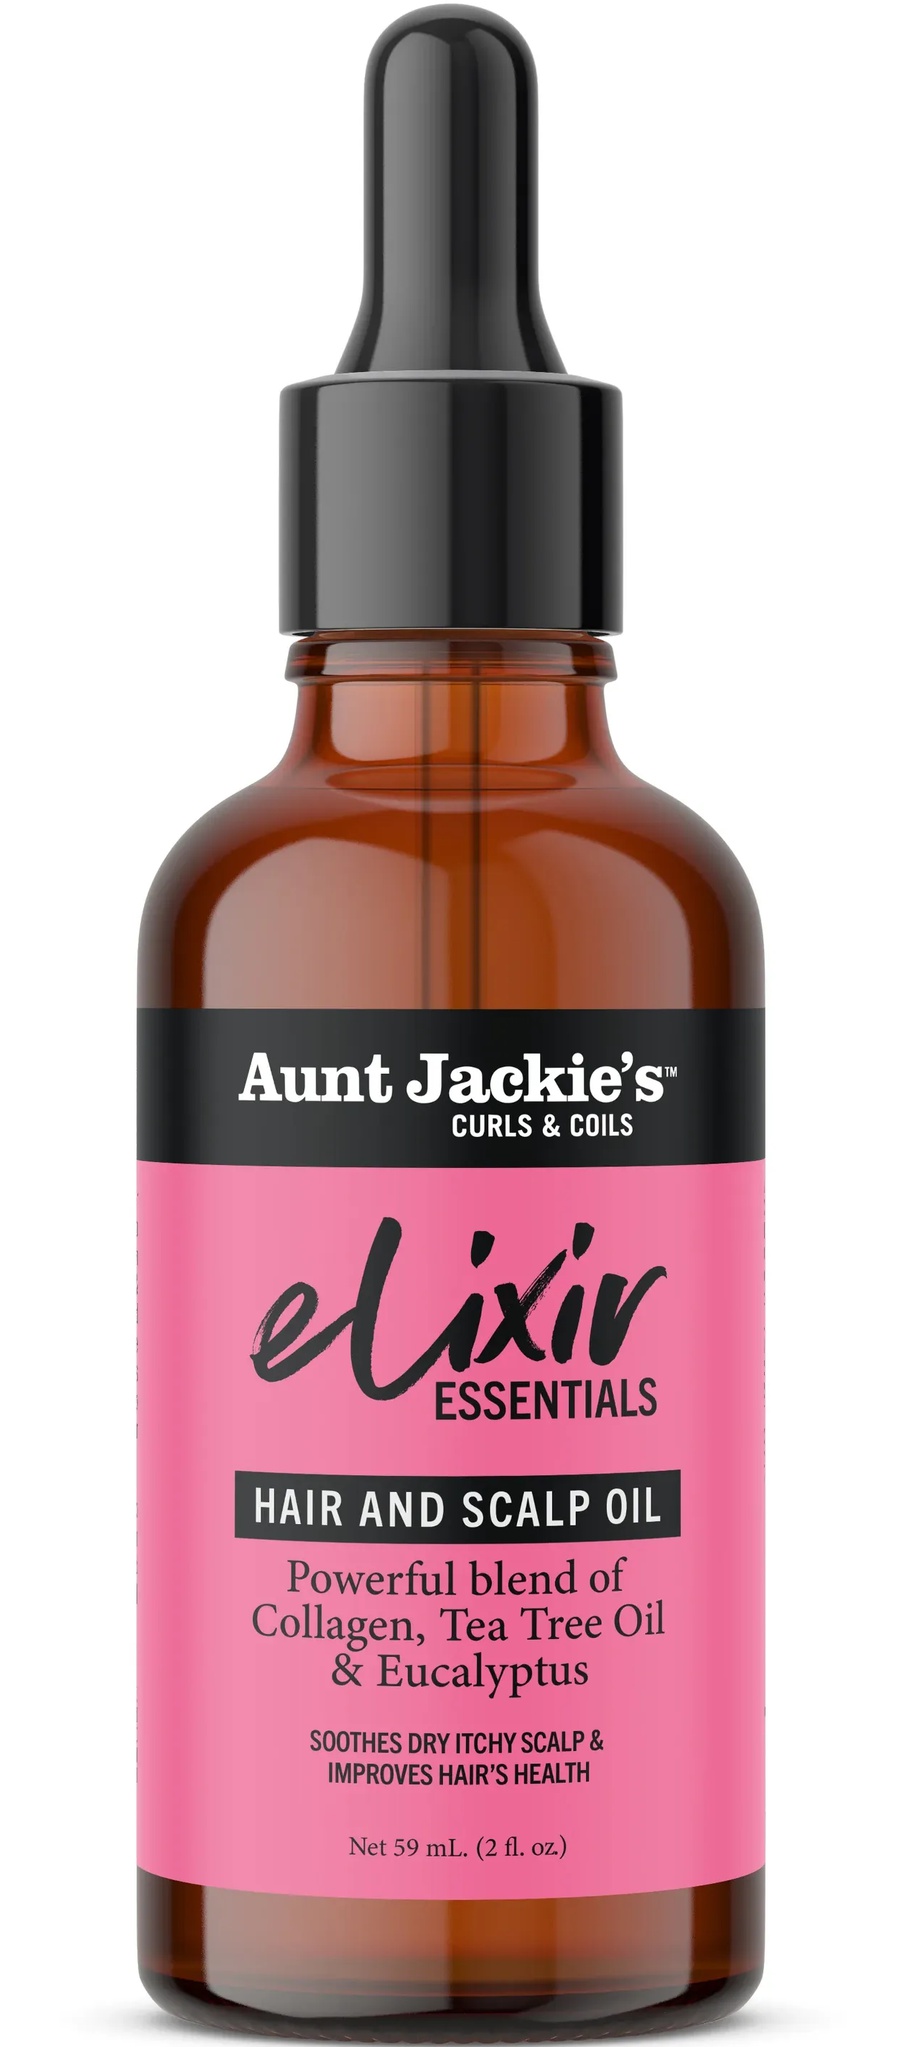 Aunt Jackie's Elixir Essentials Hair And Scalp Oil